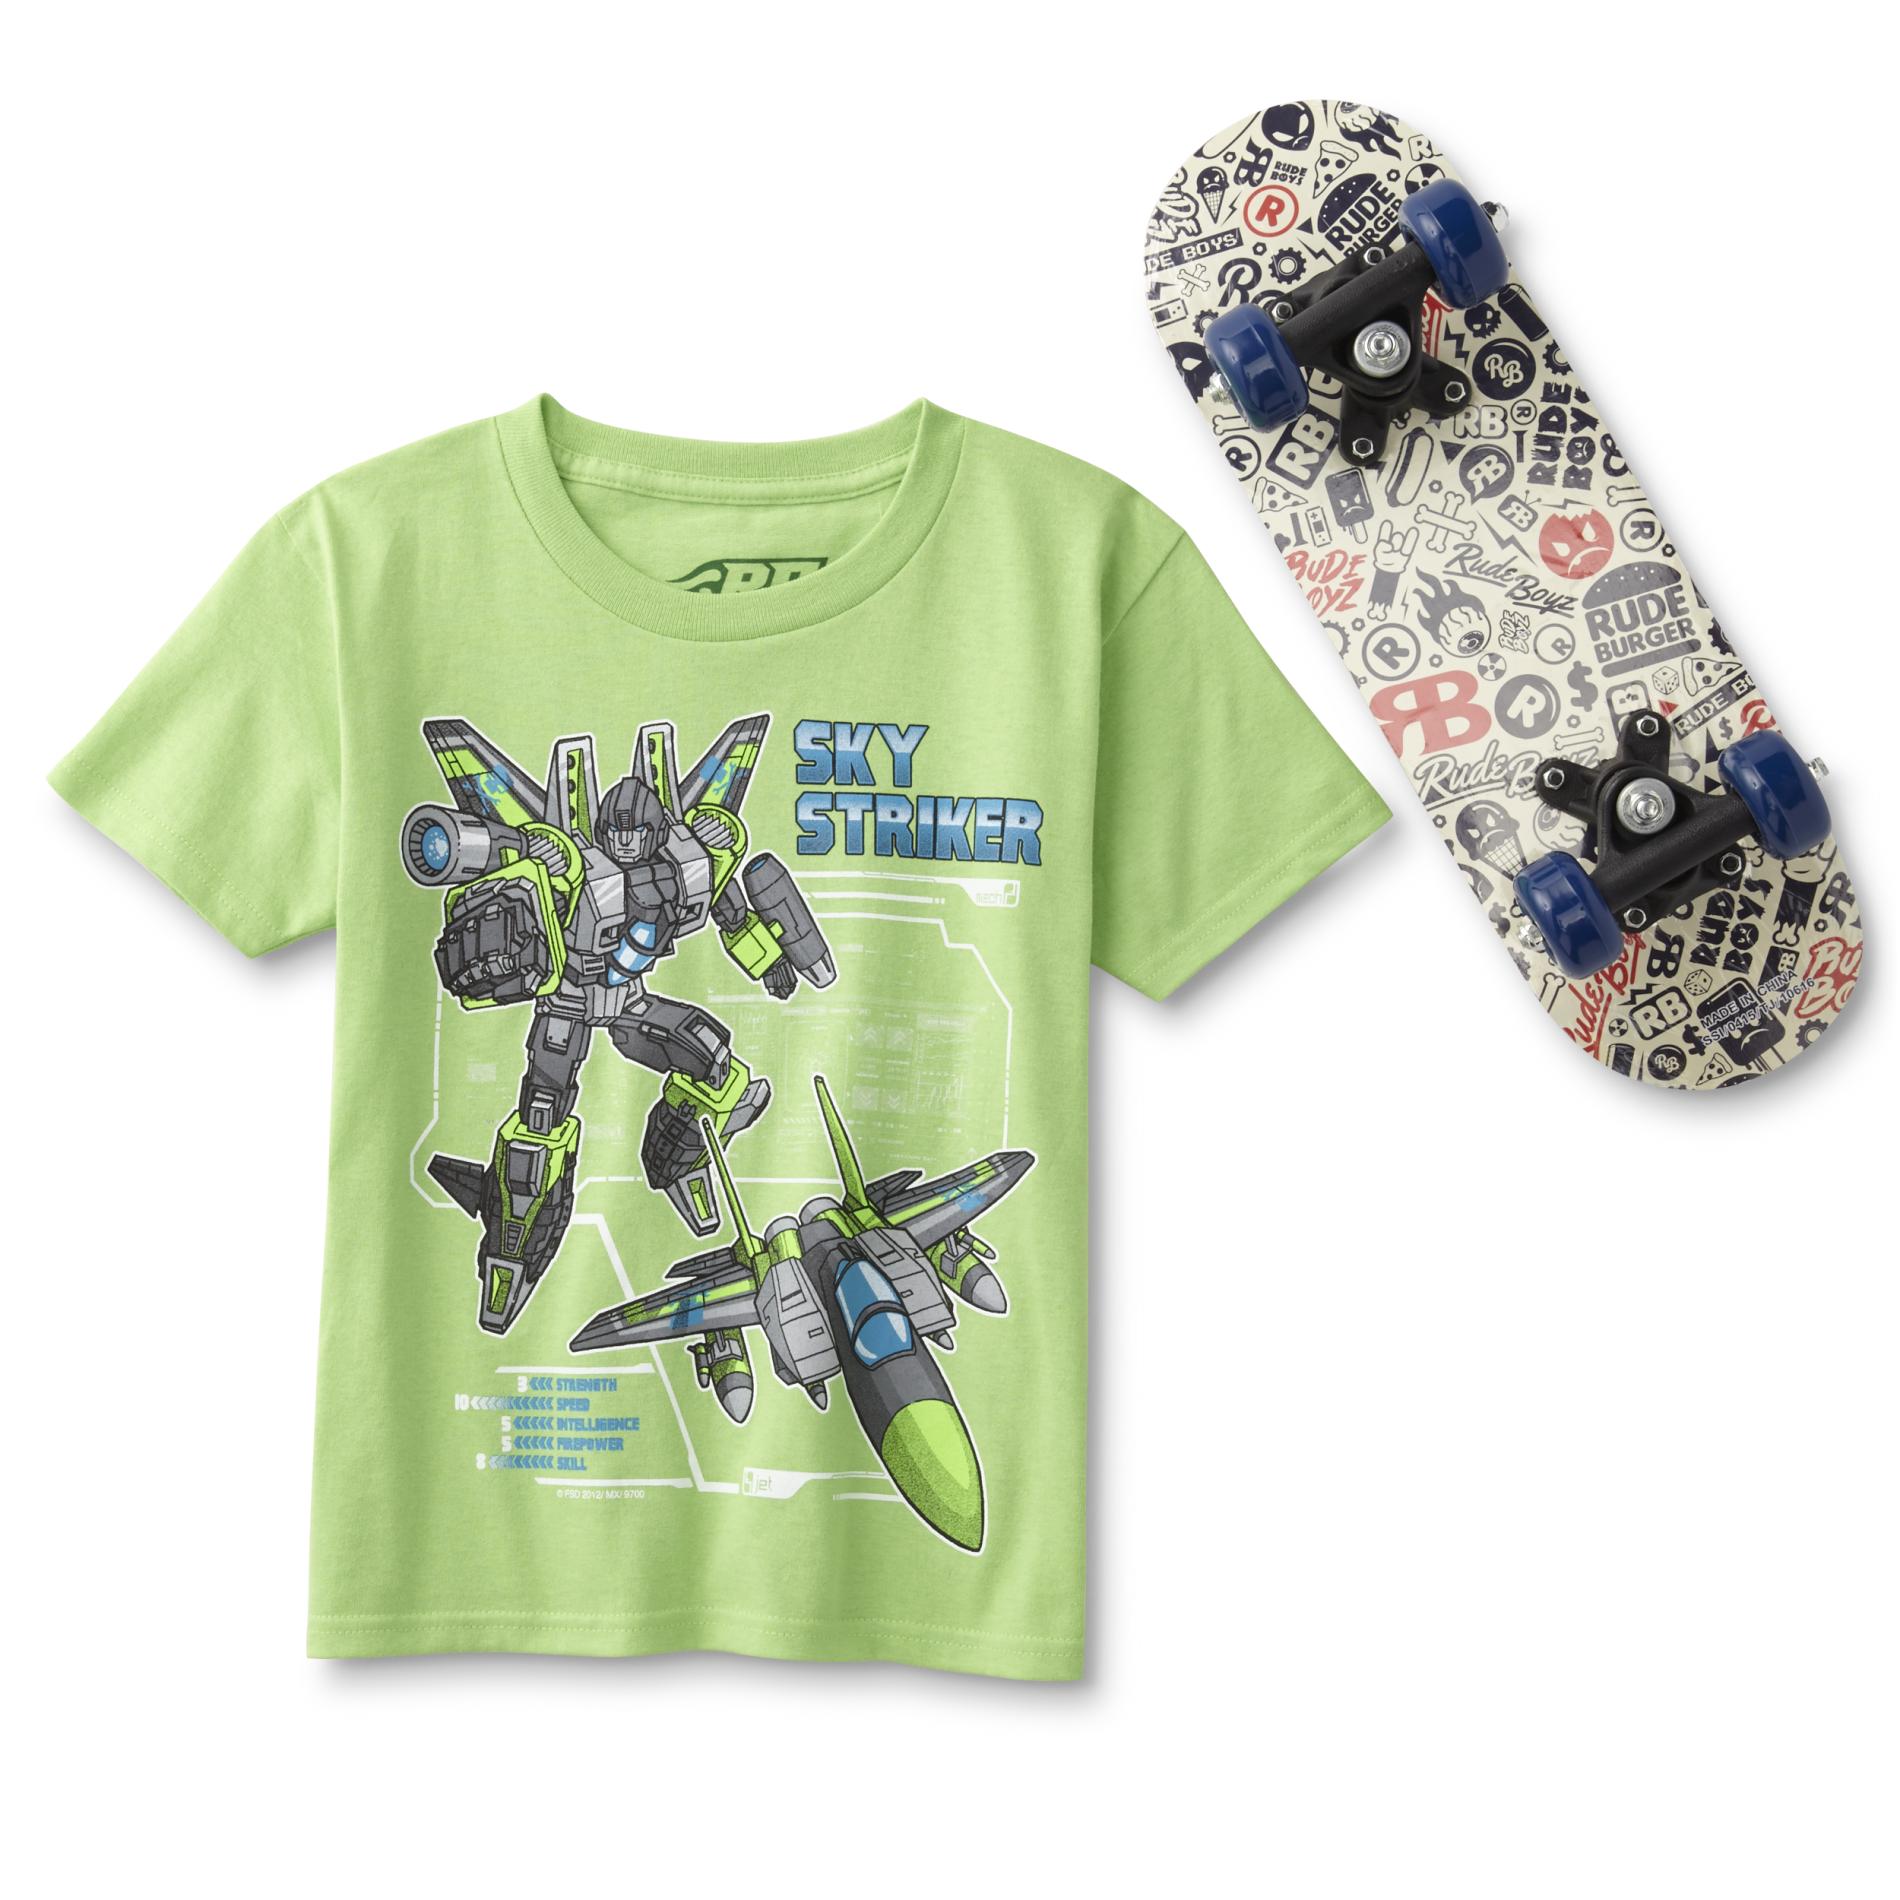 Four Seasons Boys' Graphic T-Shirt & Skateboard - Robot Jet